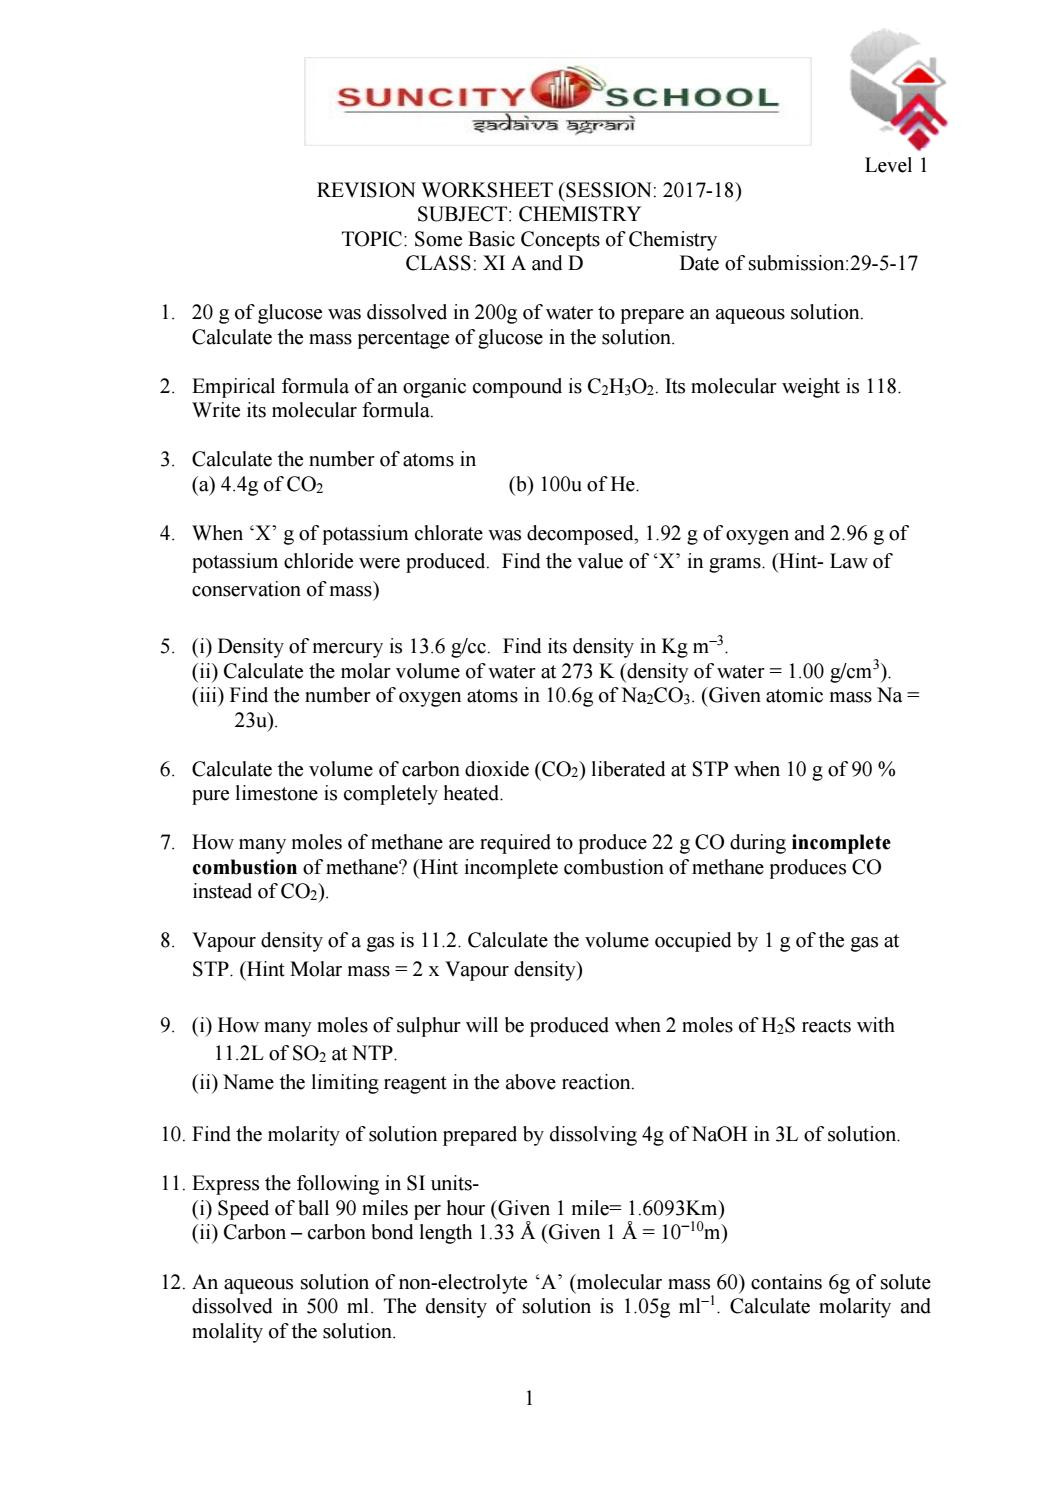 Density Calculations Worksheet 1 Chem Revision Ws Grade 11 Chap 1 by Gagan Deep Singh issuu